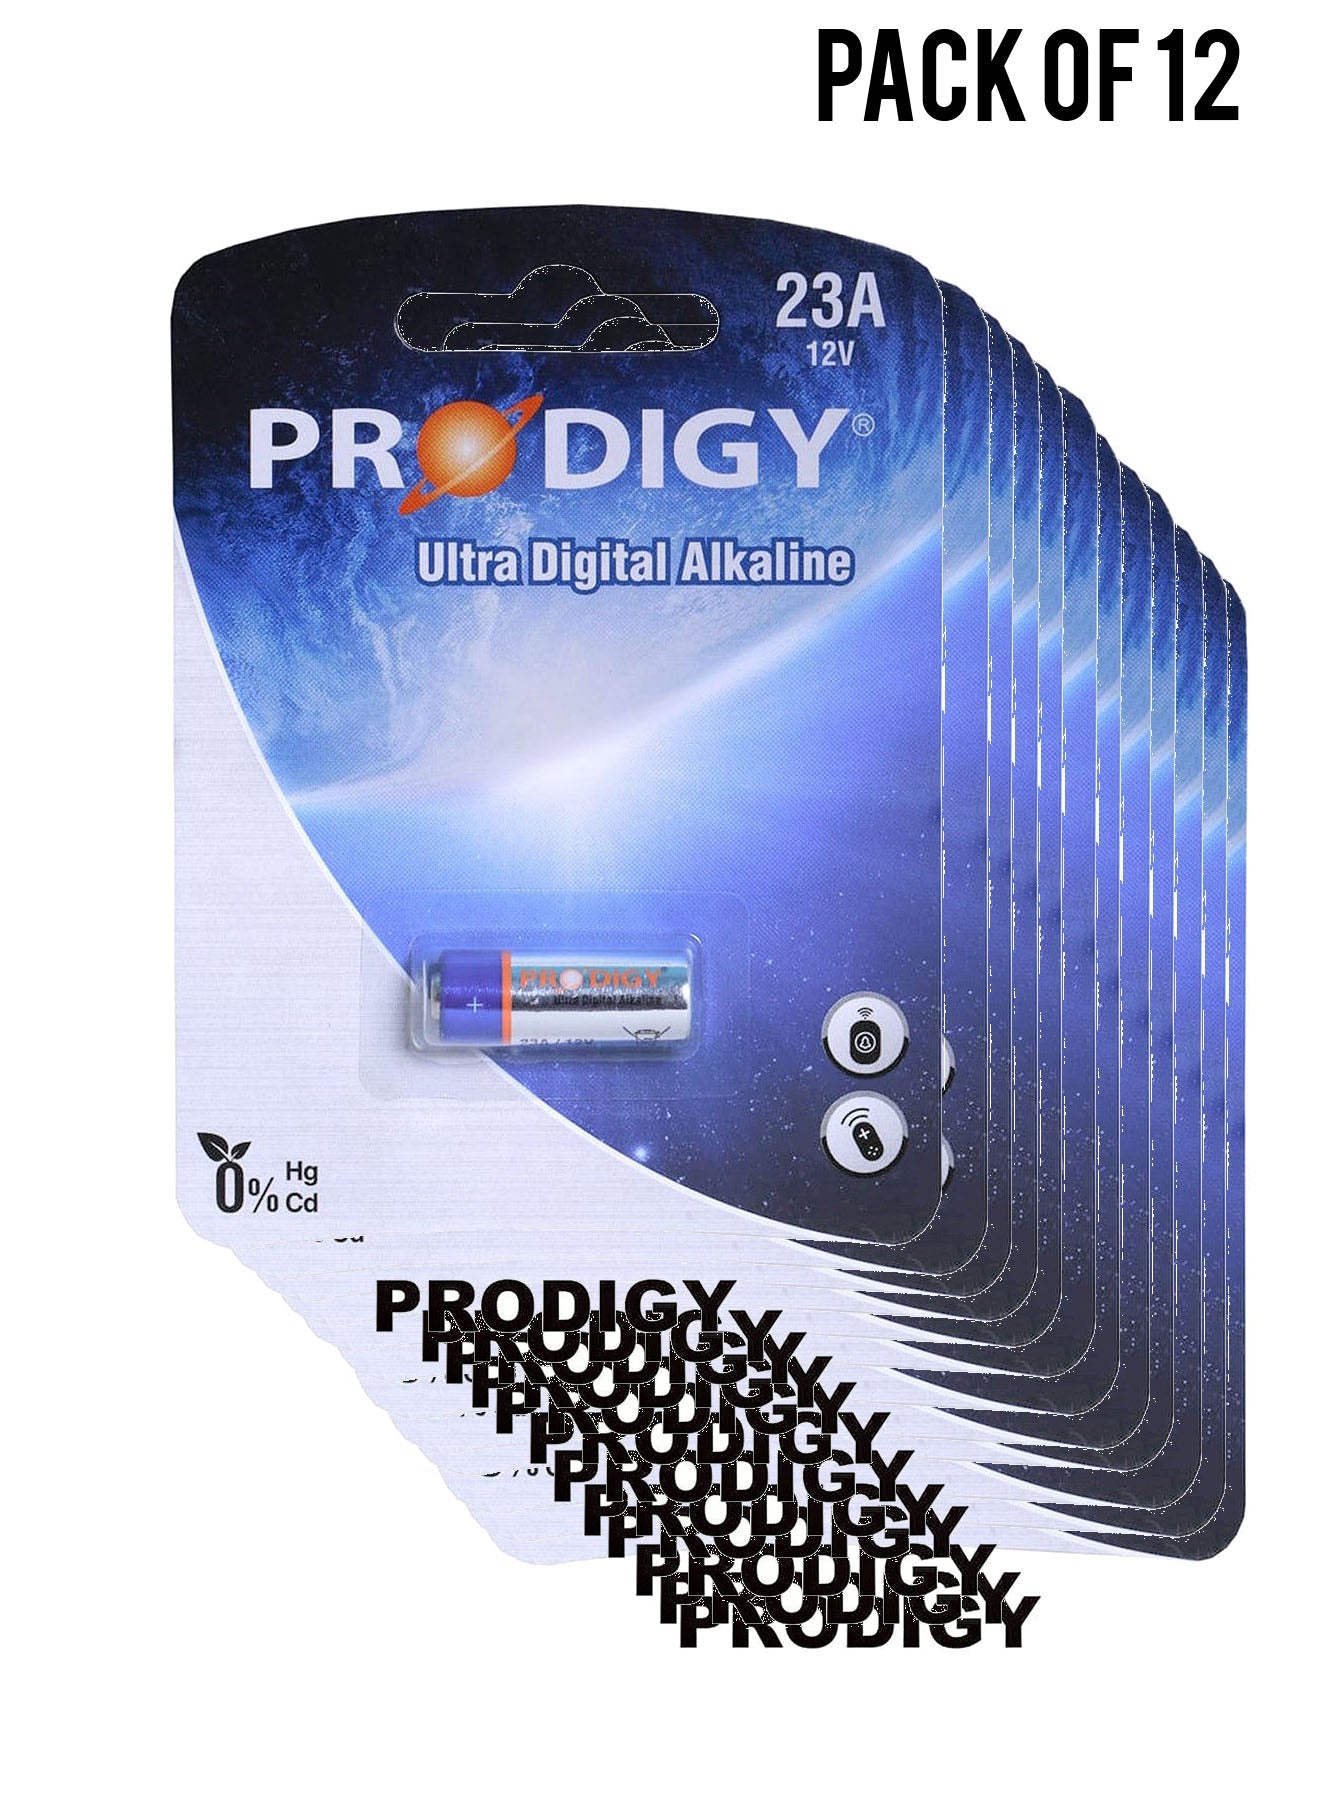 Prodigy Alkaline 23A 12V Value Pack of 12 